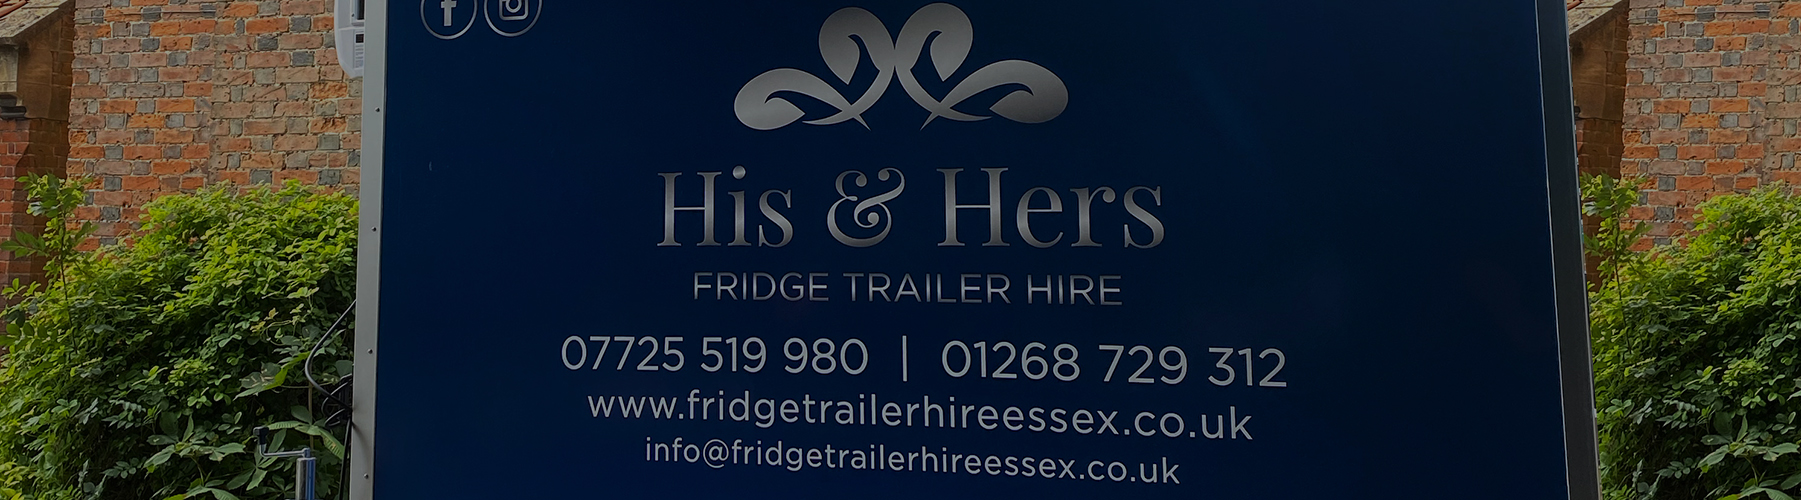 Fridge hire services Essex